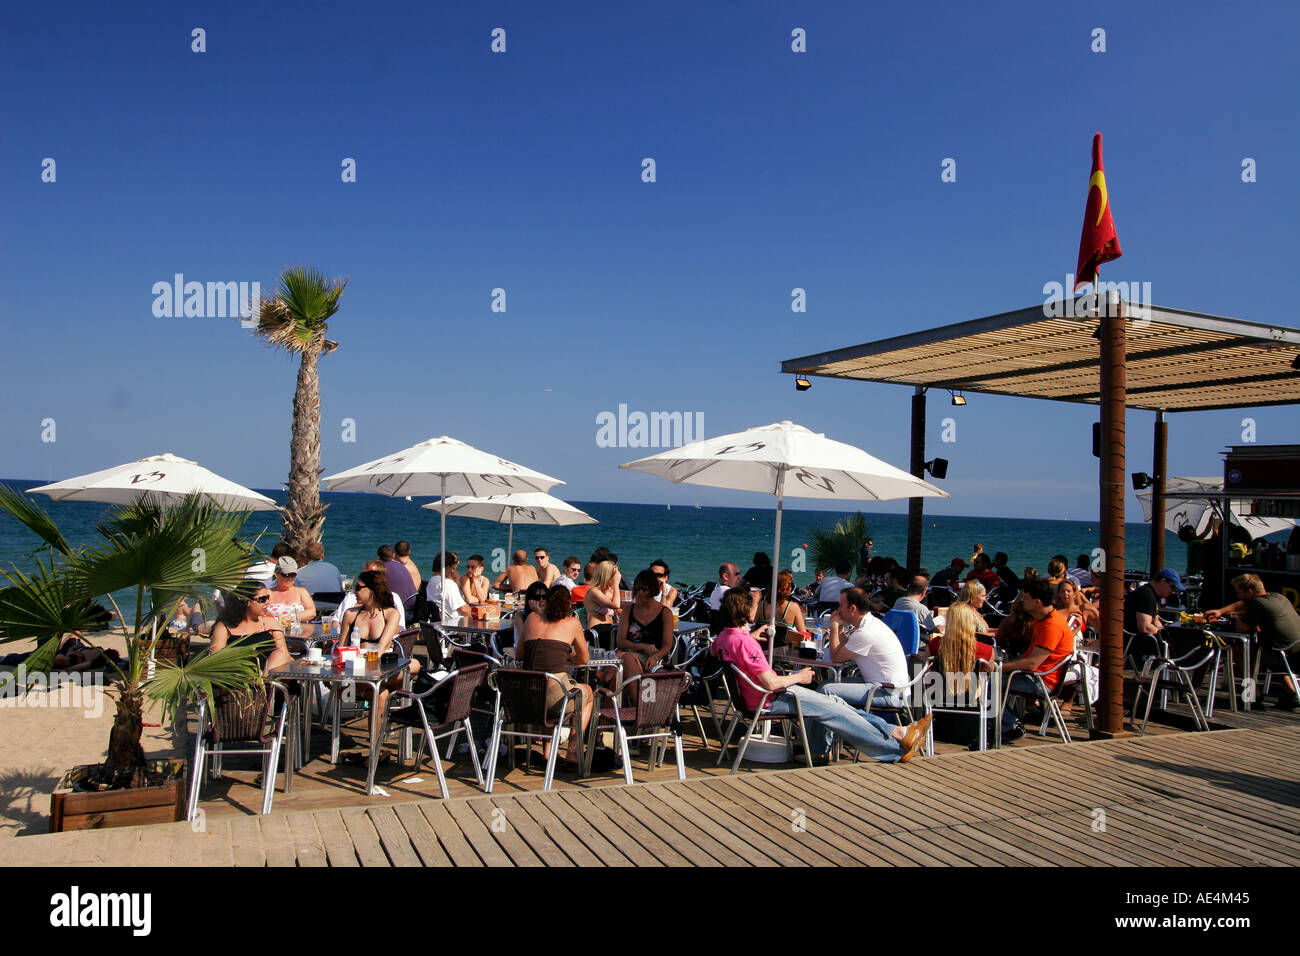 Espagne Barcelone plage Platja de la Barceloneta Beach bar les gens Banque D'Images